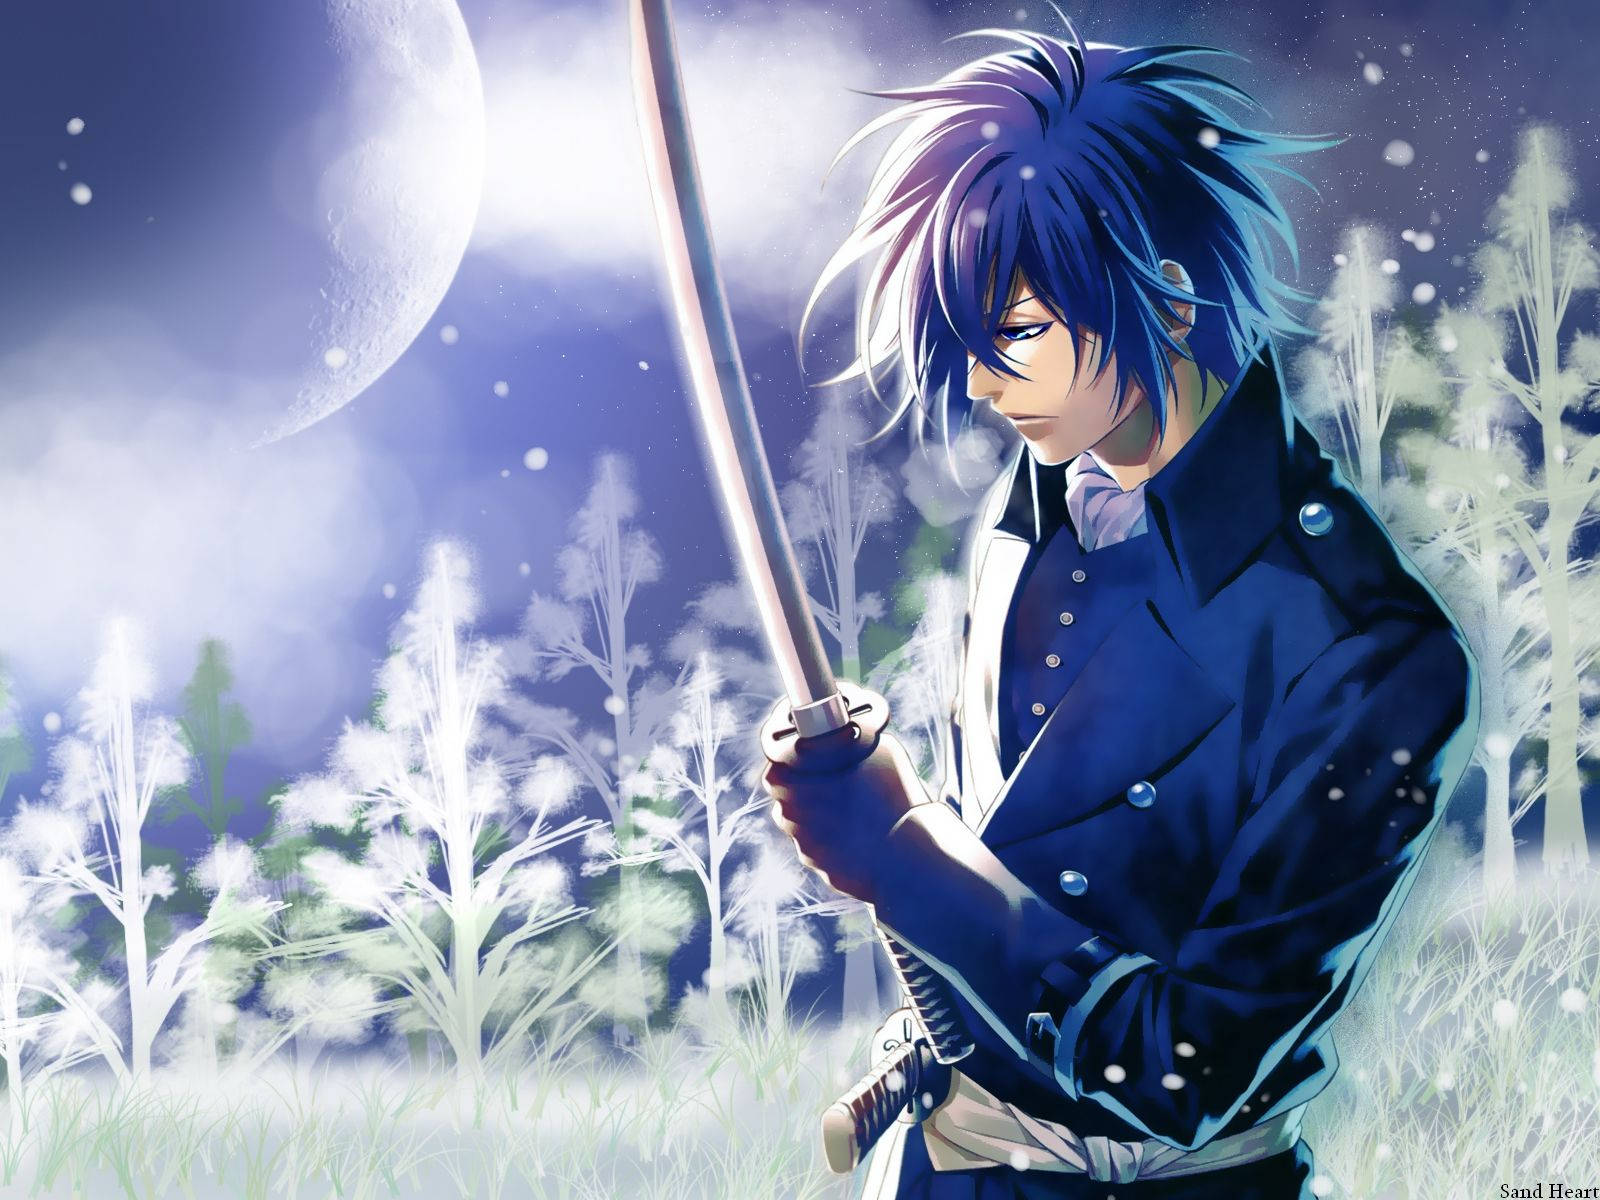 Untriste Chico De Anime Azul Sentado A La Luz De La Luna. Fondo de pantalla